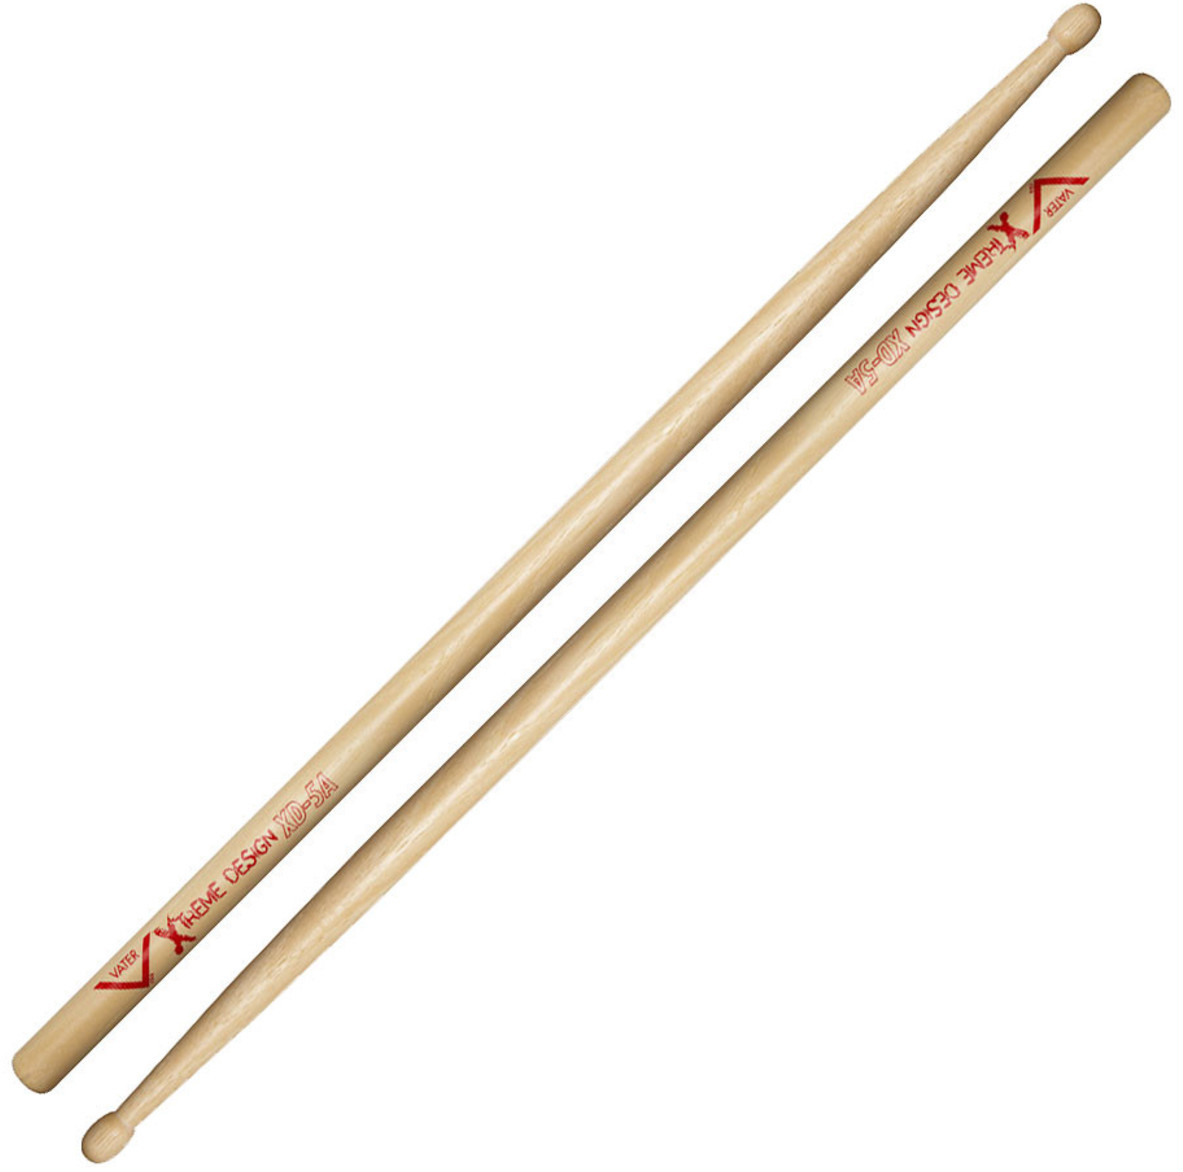 Vater Xtreme Design 5A Wood Tip Drum Sticks